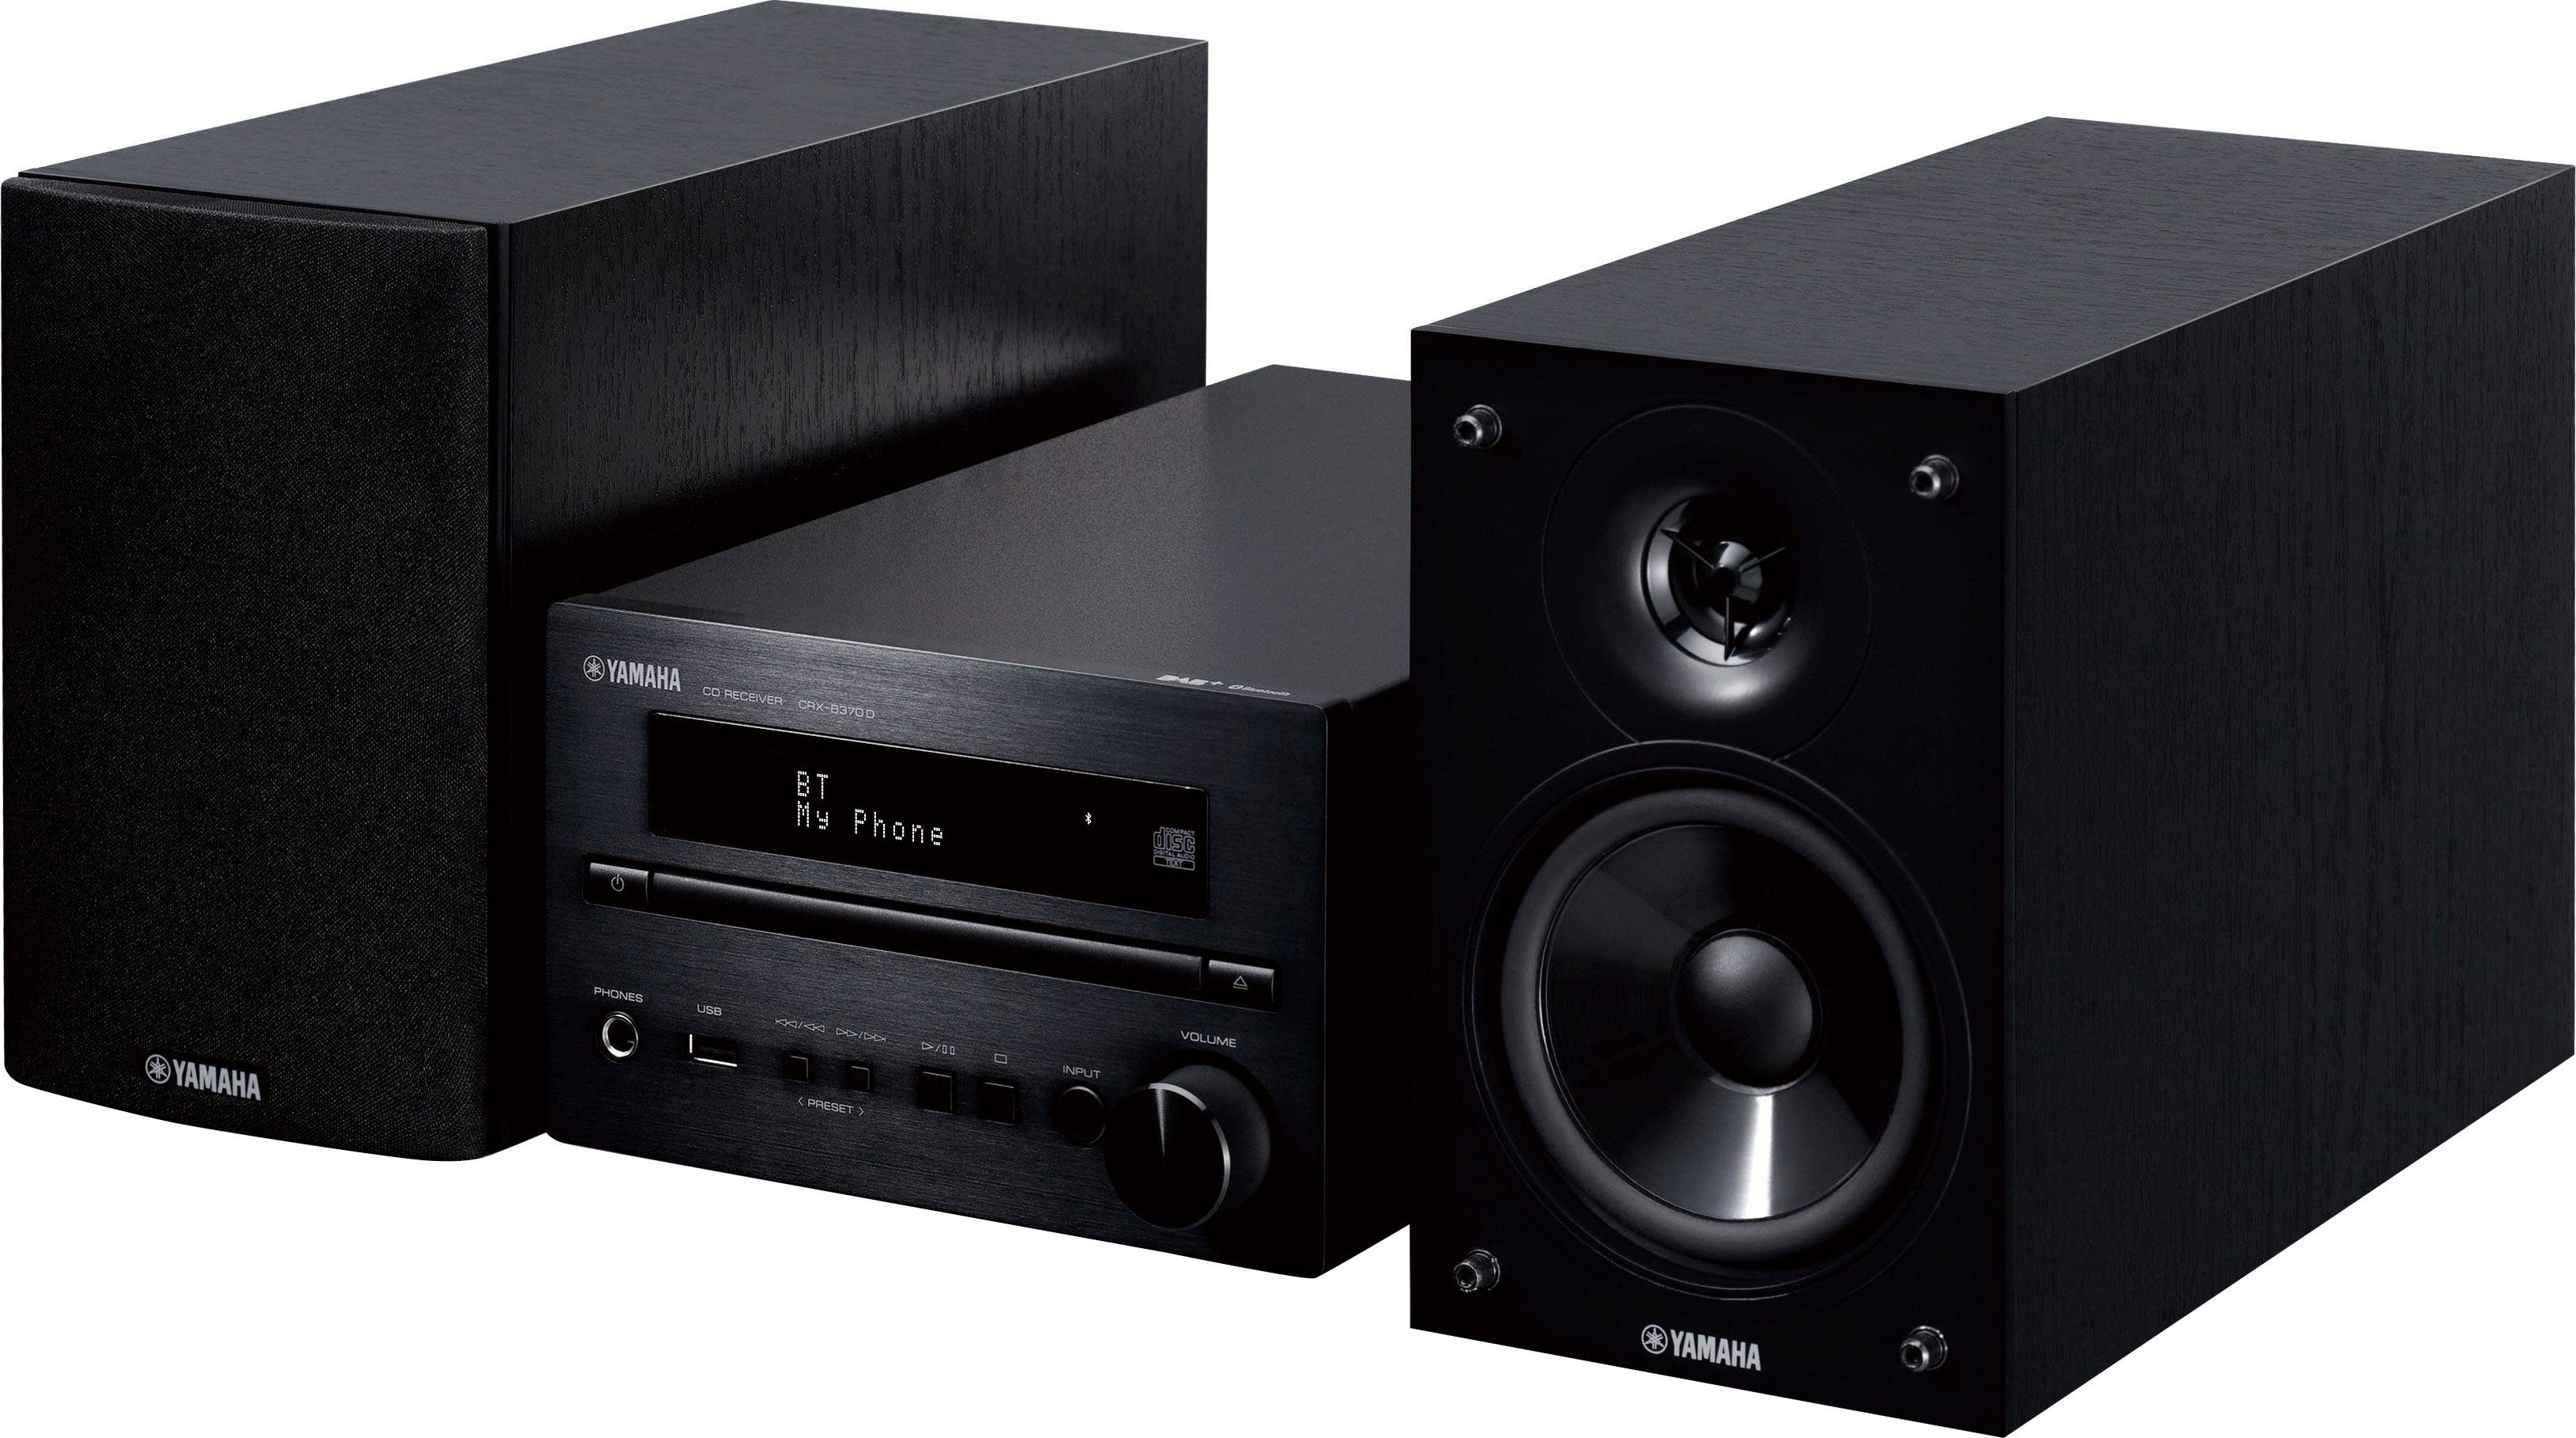 MCR-B270D W) Digitalradio (DAB) (DAB), FM-Tuner, (Digitalradio schwarz Yamaha 40